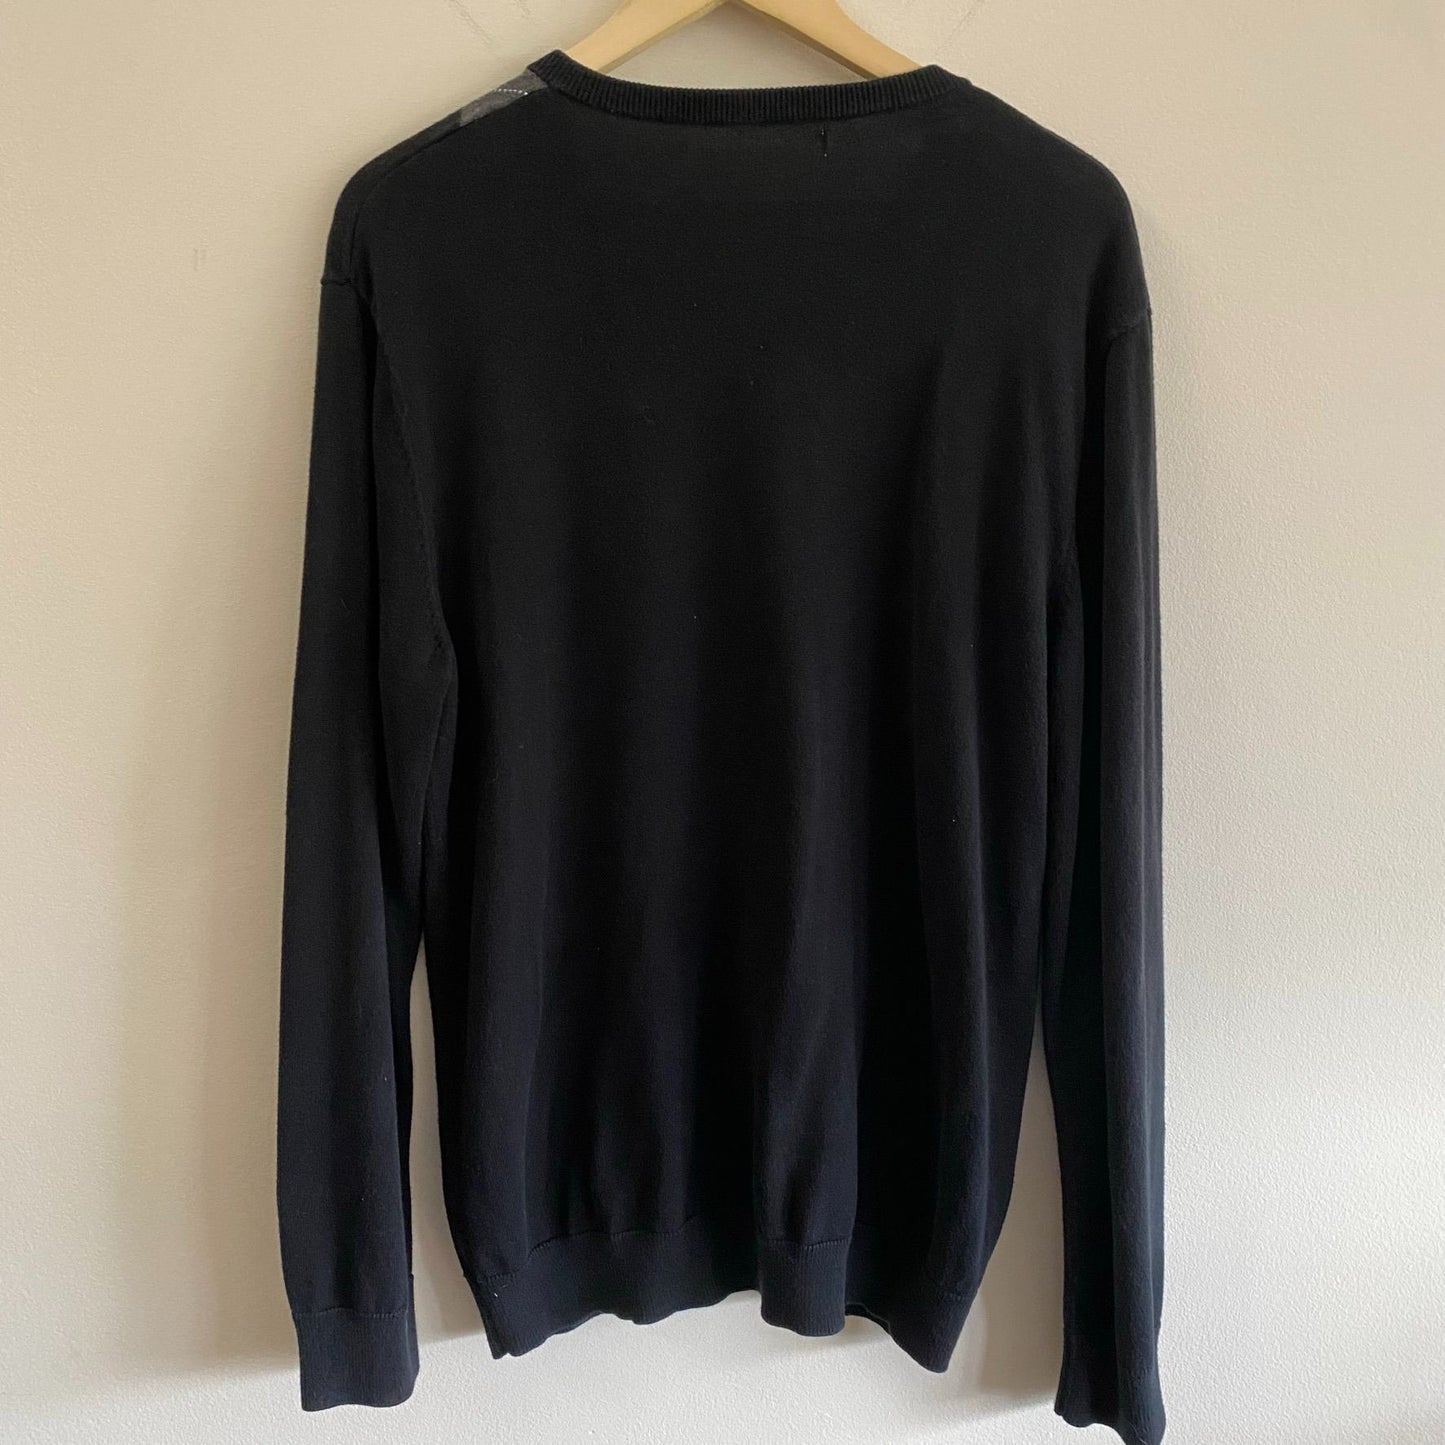 Black Argyle V-Neck Sweater